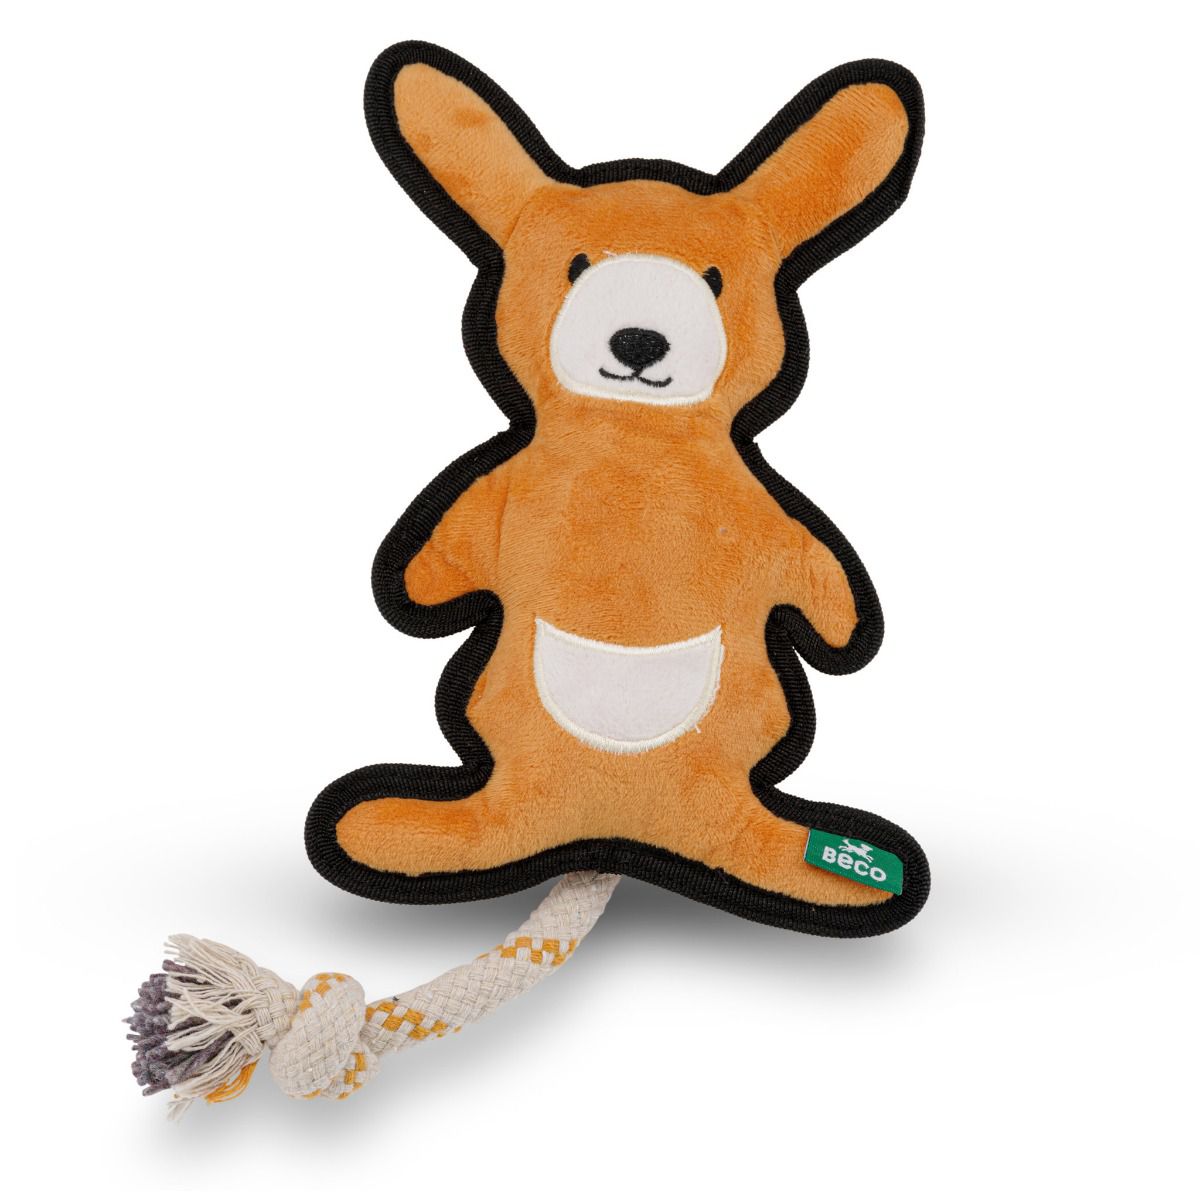 Afbeelding Knuffel Hond – Beco Plush Toy Kangaroo